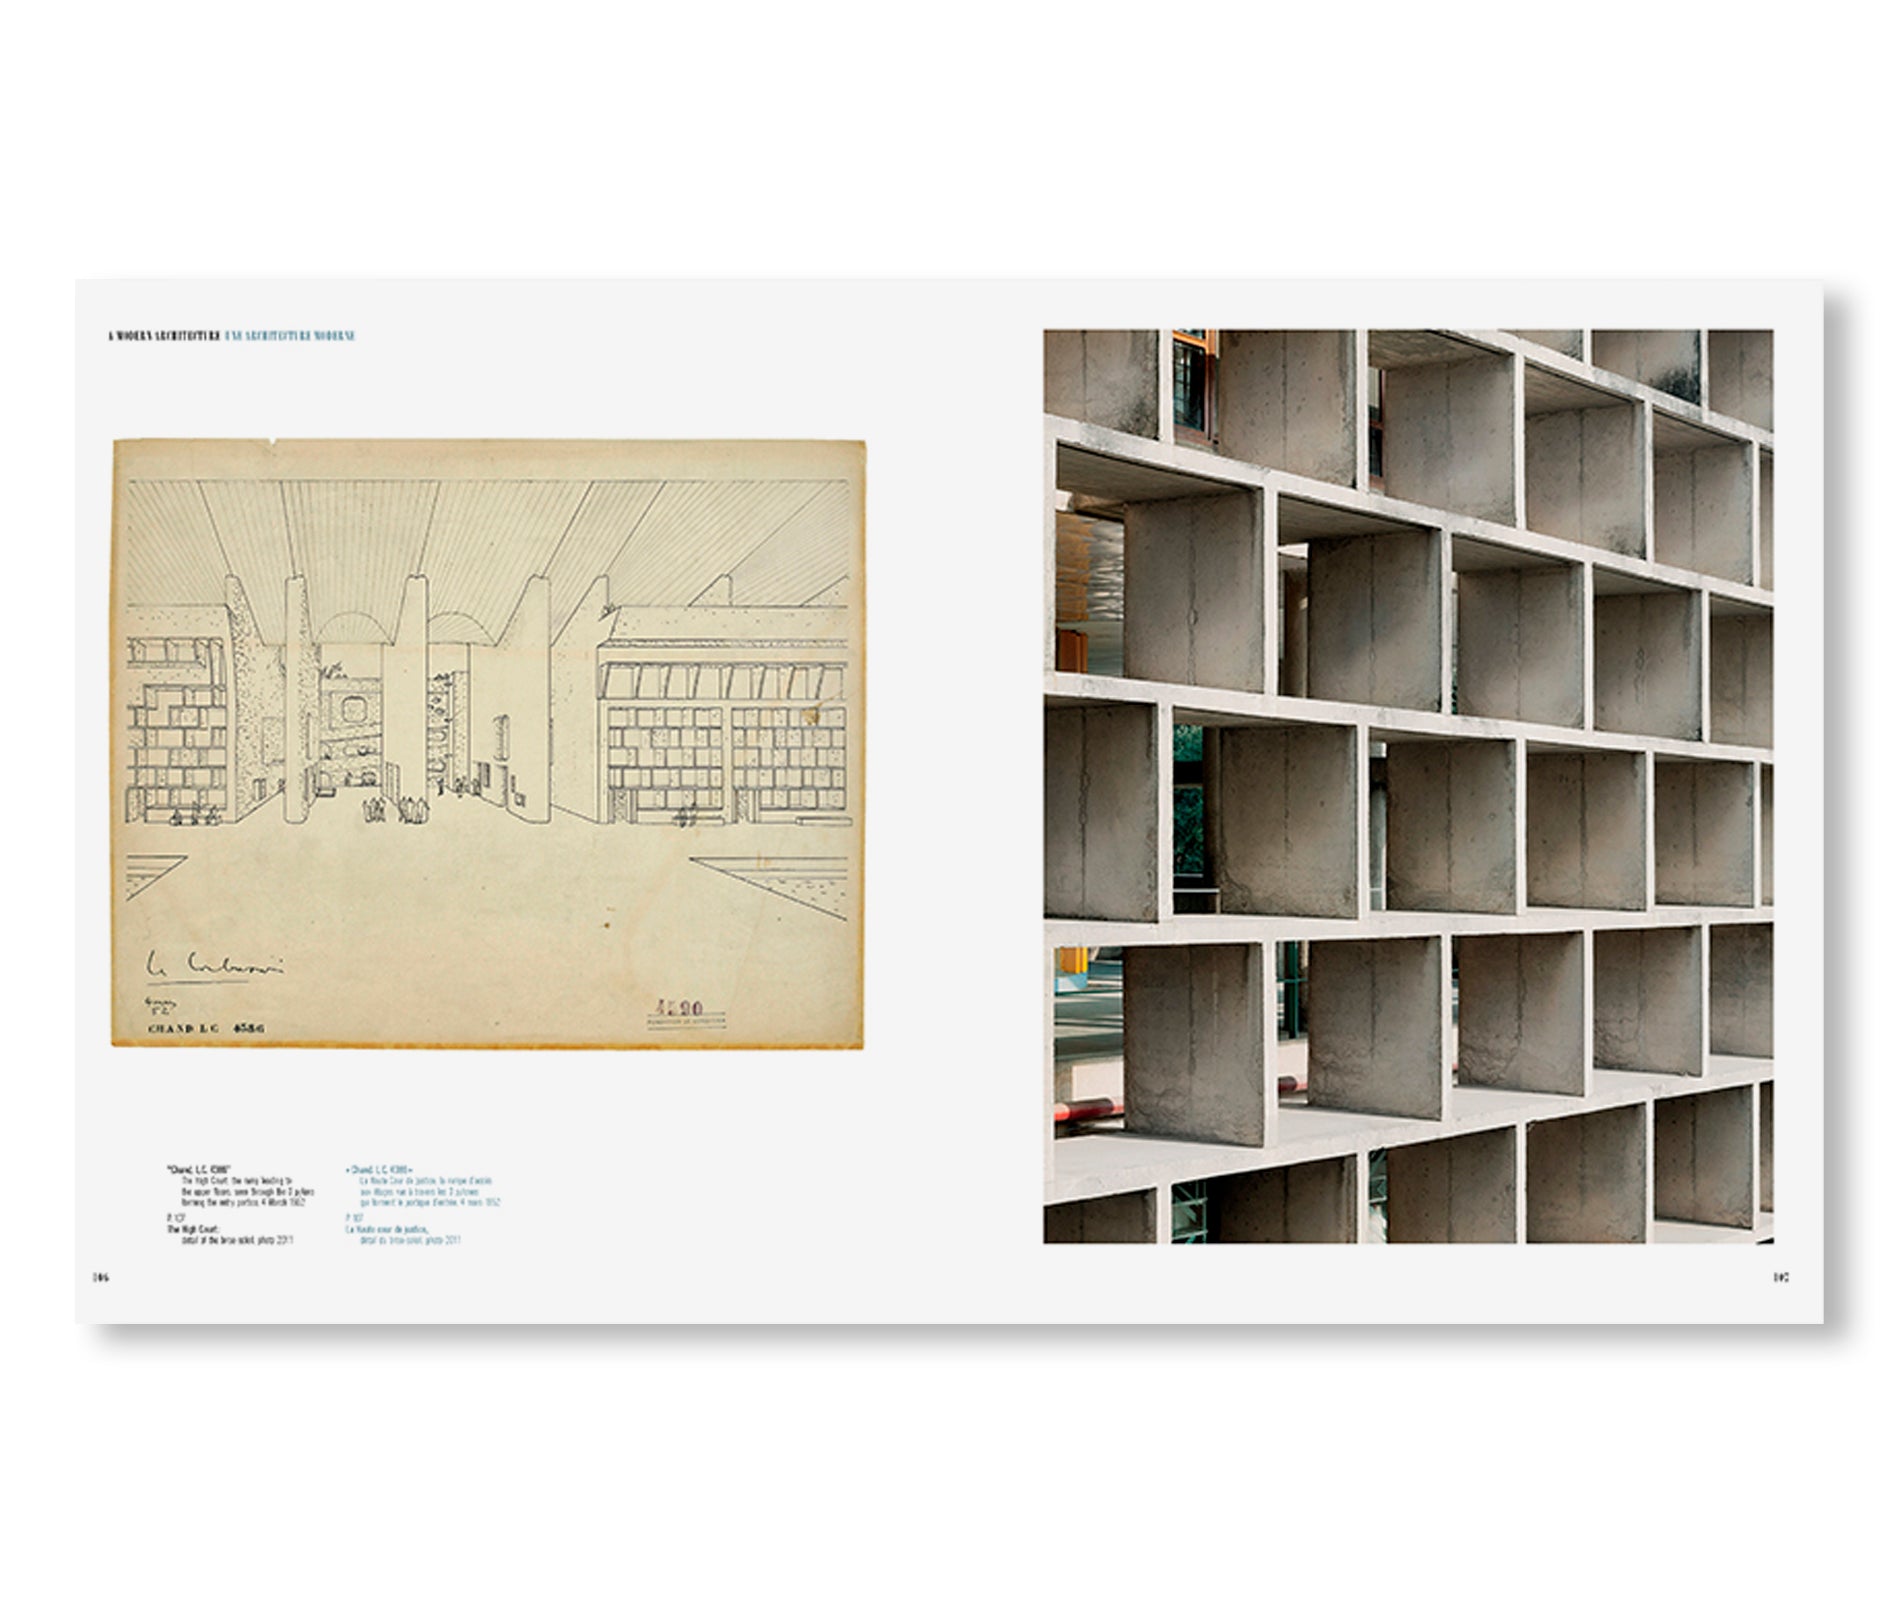 LE CORBUSIER – PIERRE JEANNERET CHANDIGARH, INDIA by Le Corbusier, Pierre Jeanneret